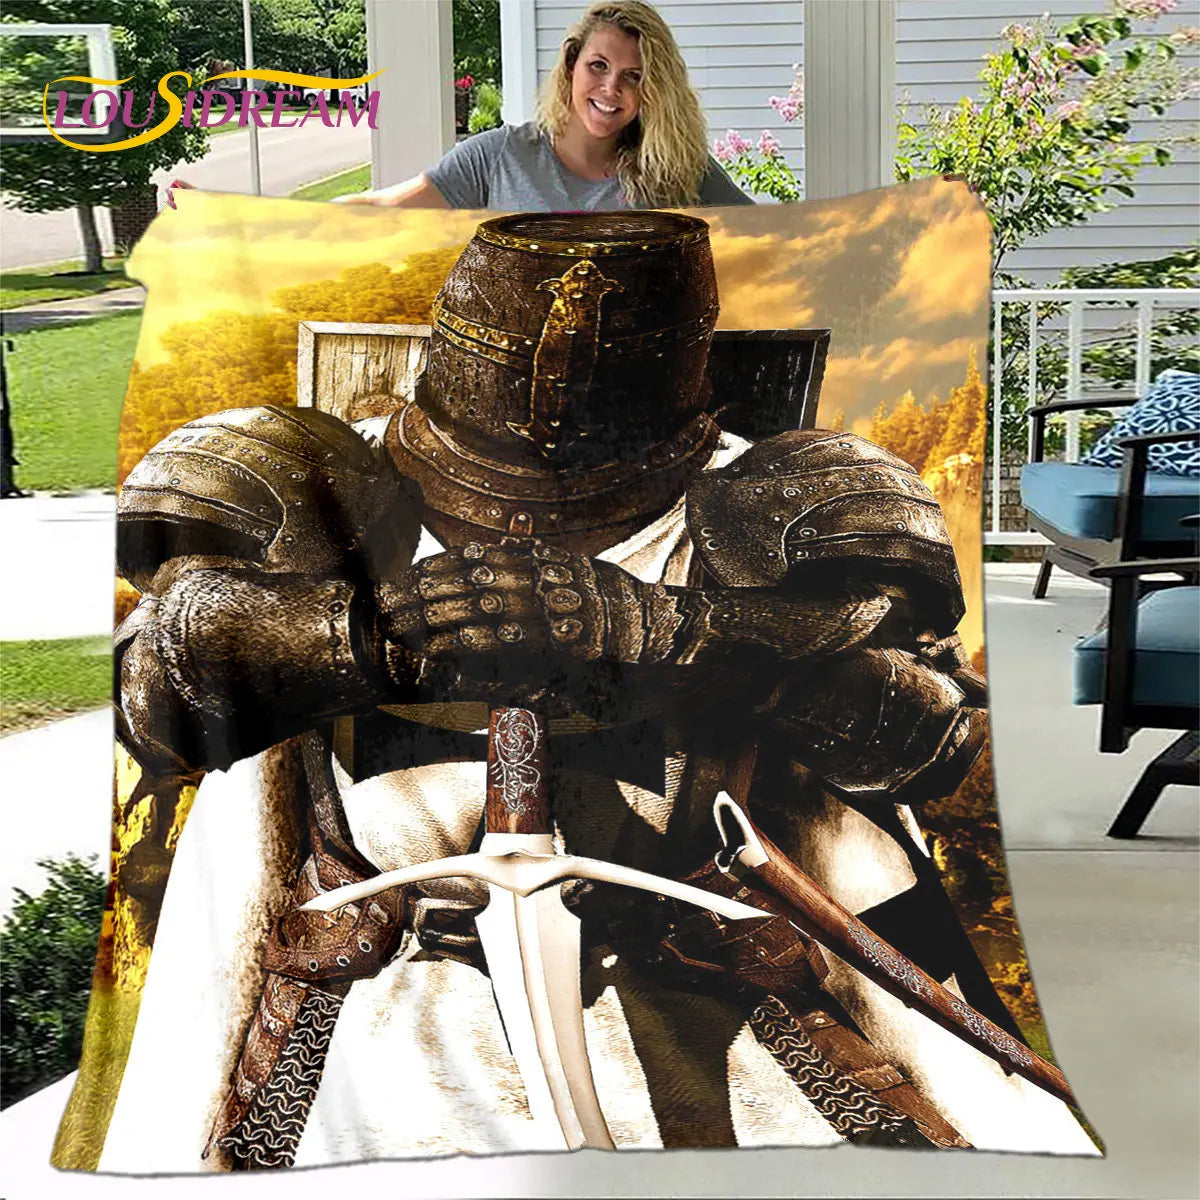 Cavalier Knight Templar Crusaders Games Soft Plush Blanket,Flannel Blanket Throw Blanket for Living Room Bedroom Bed Sofa Picnic